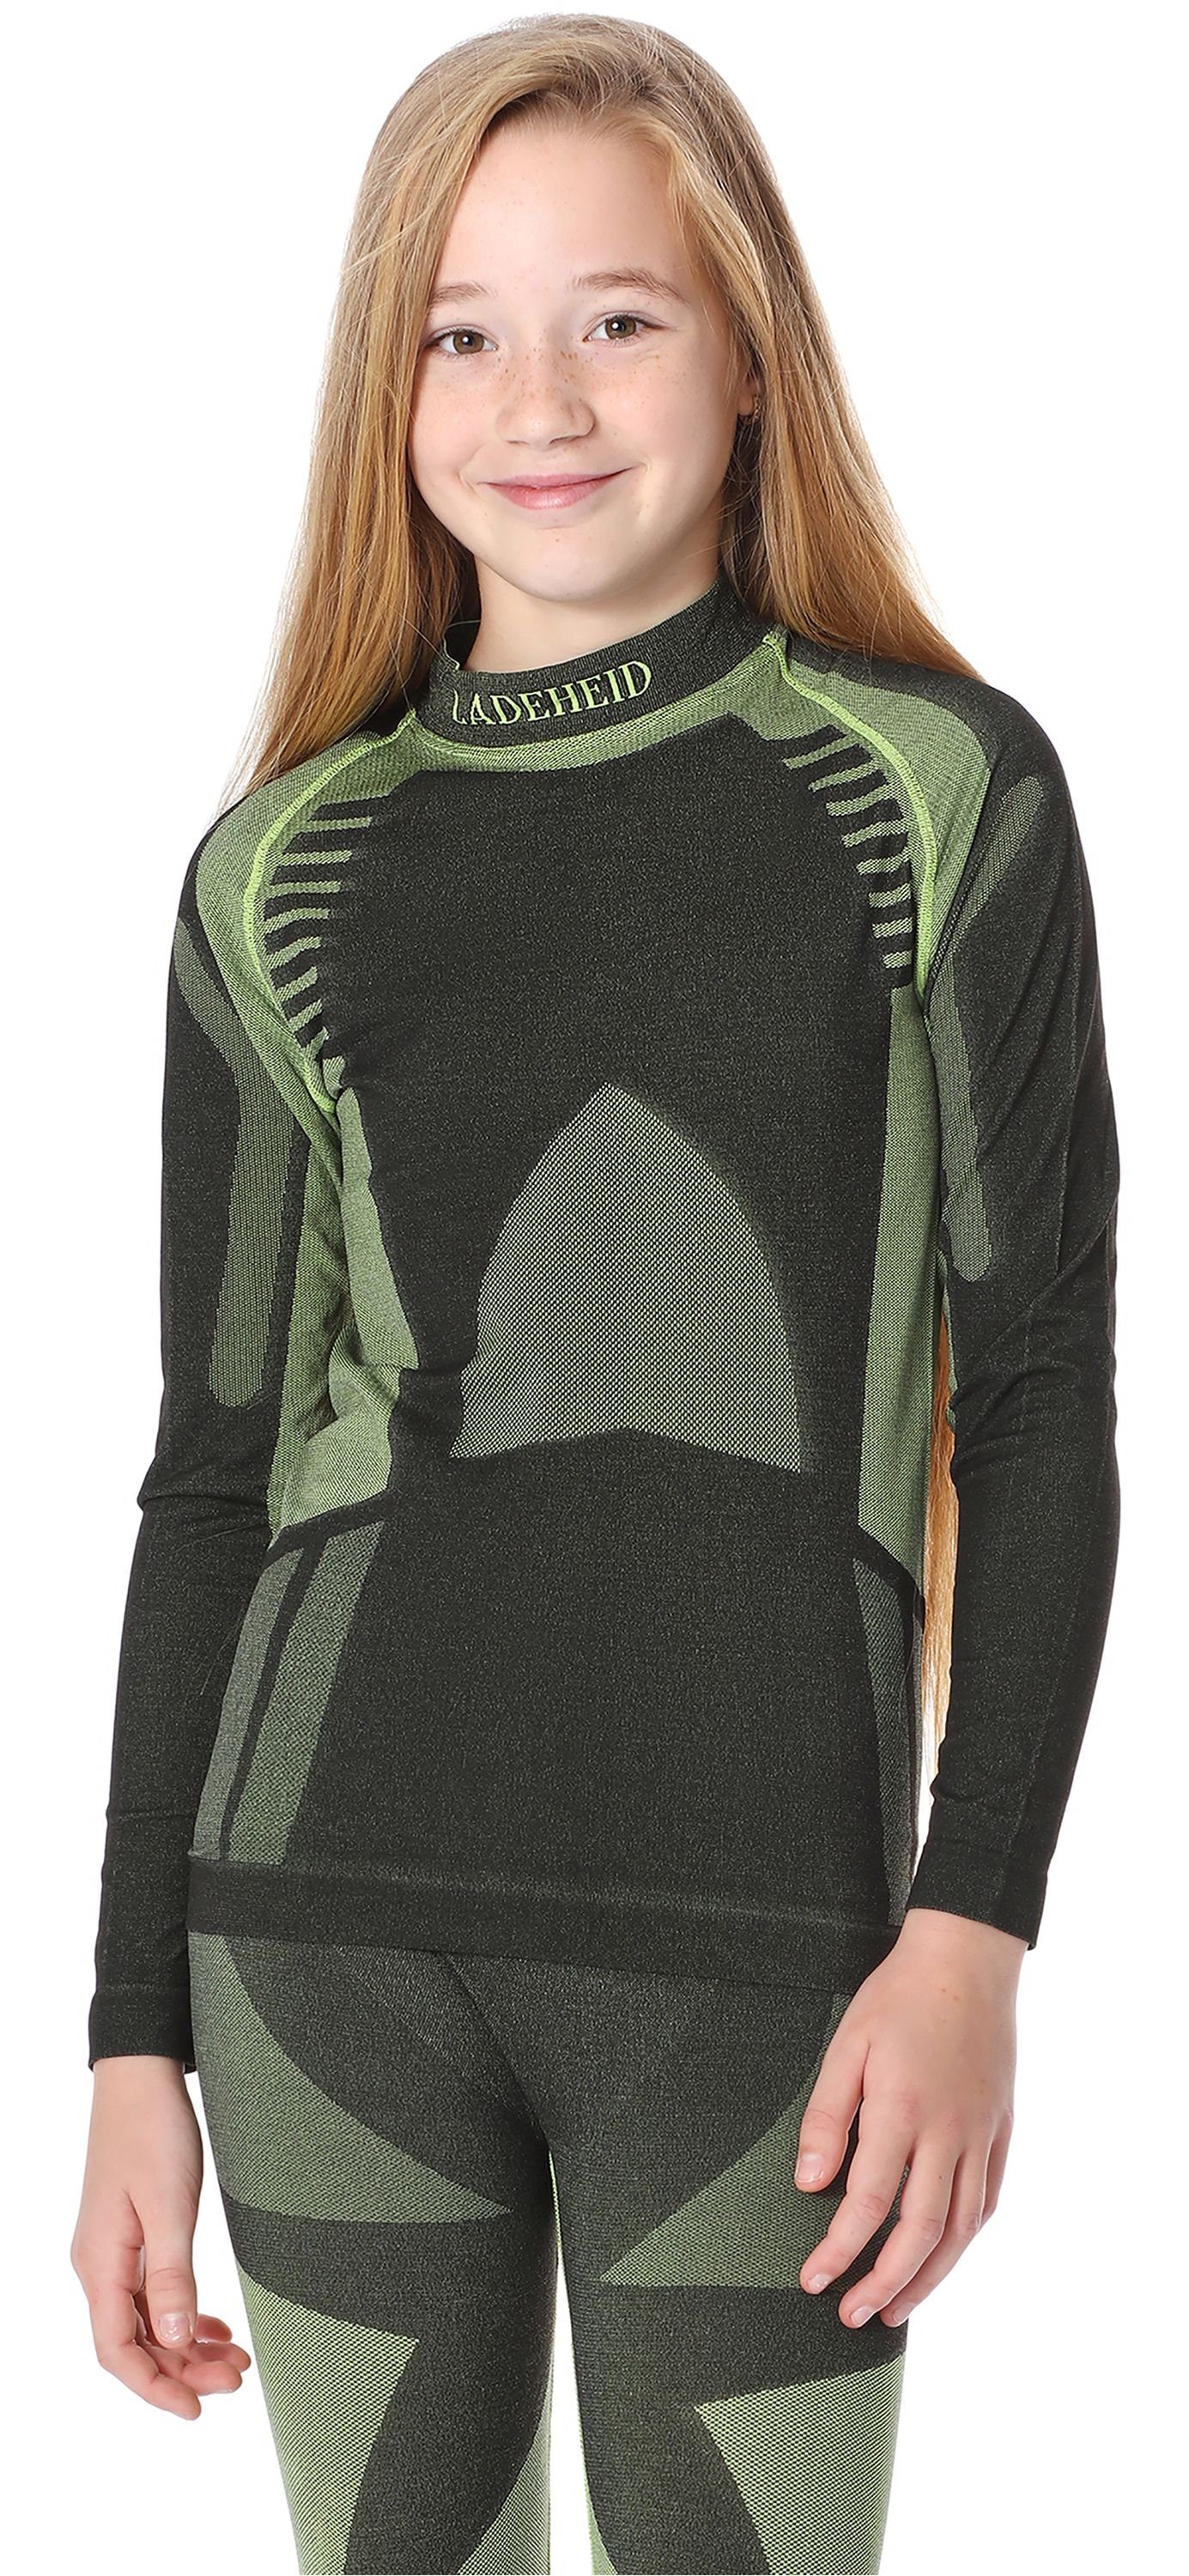 Damen Funktionsunterwäsche Funktionsunterhemd Thermoaktiv langarm Schwarz/Grün Shirt Ladeheid